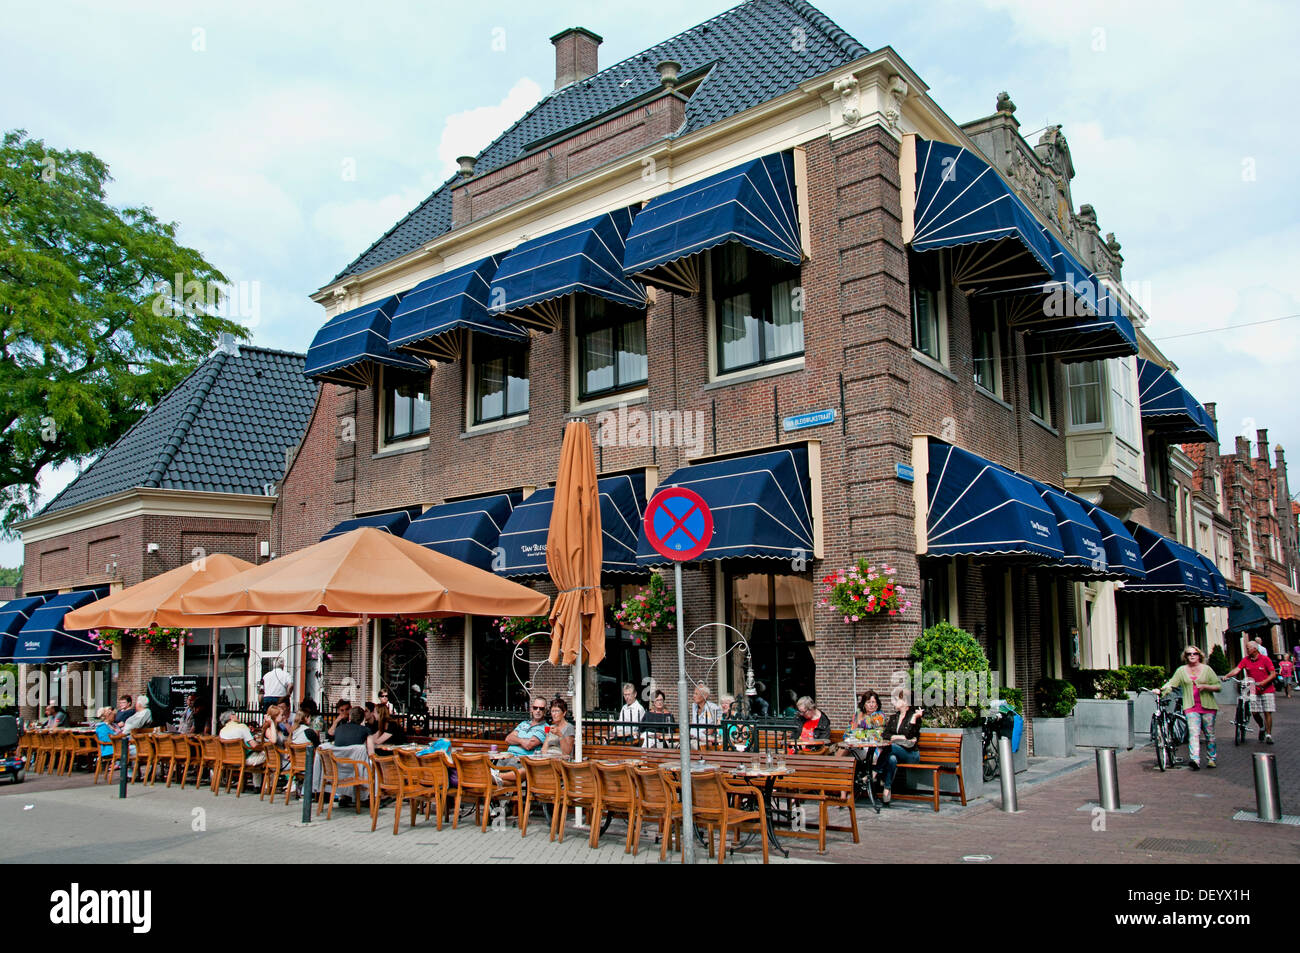 Al di fuori di Cafe van Bleiswijk Enkhuizen Paesi Bassi Bar Pub Ristorante marciapiede Foto Stock